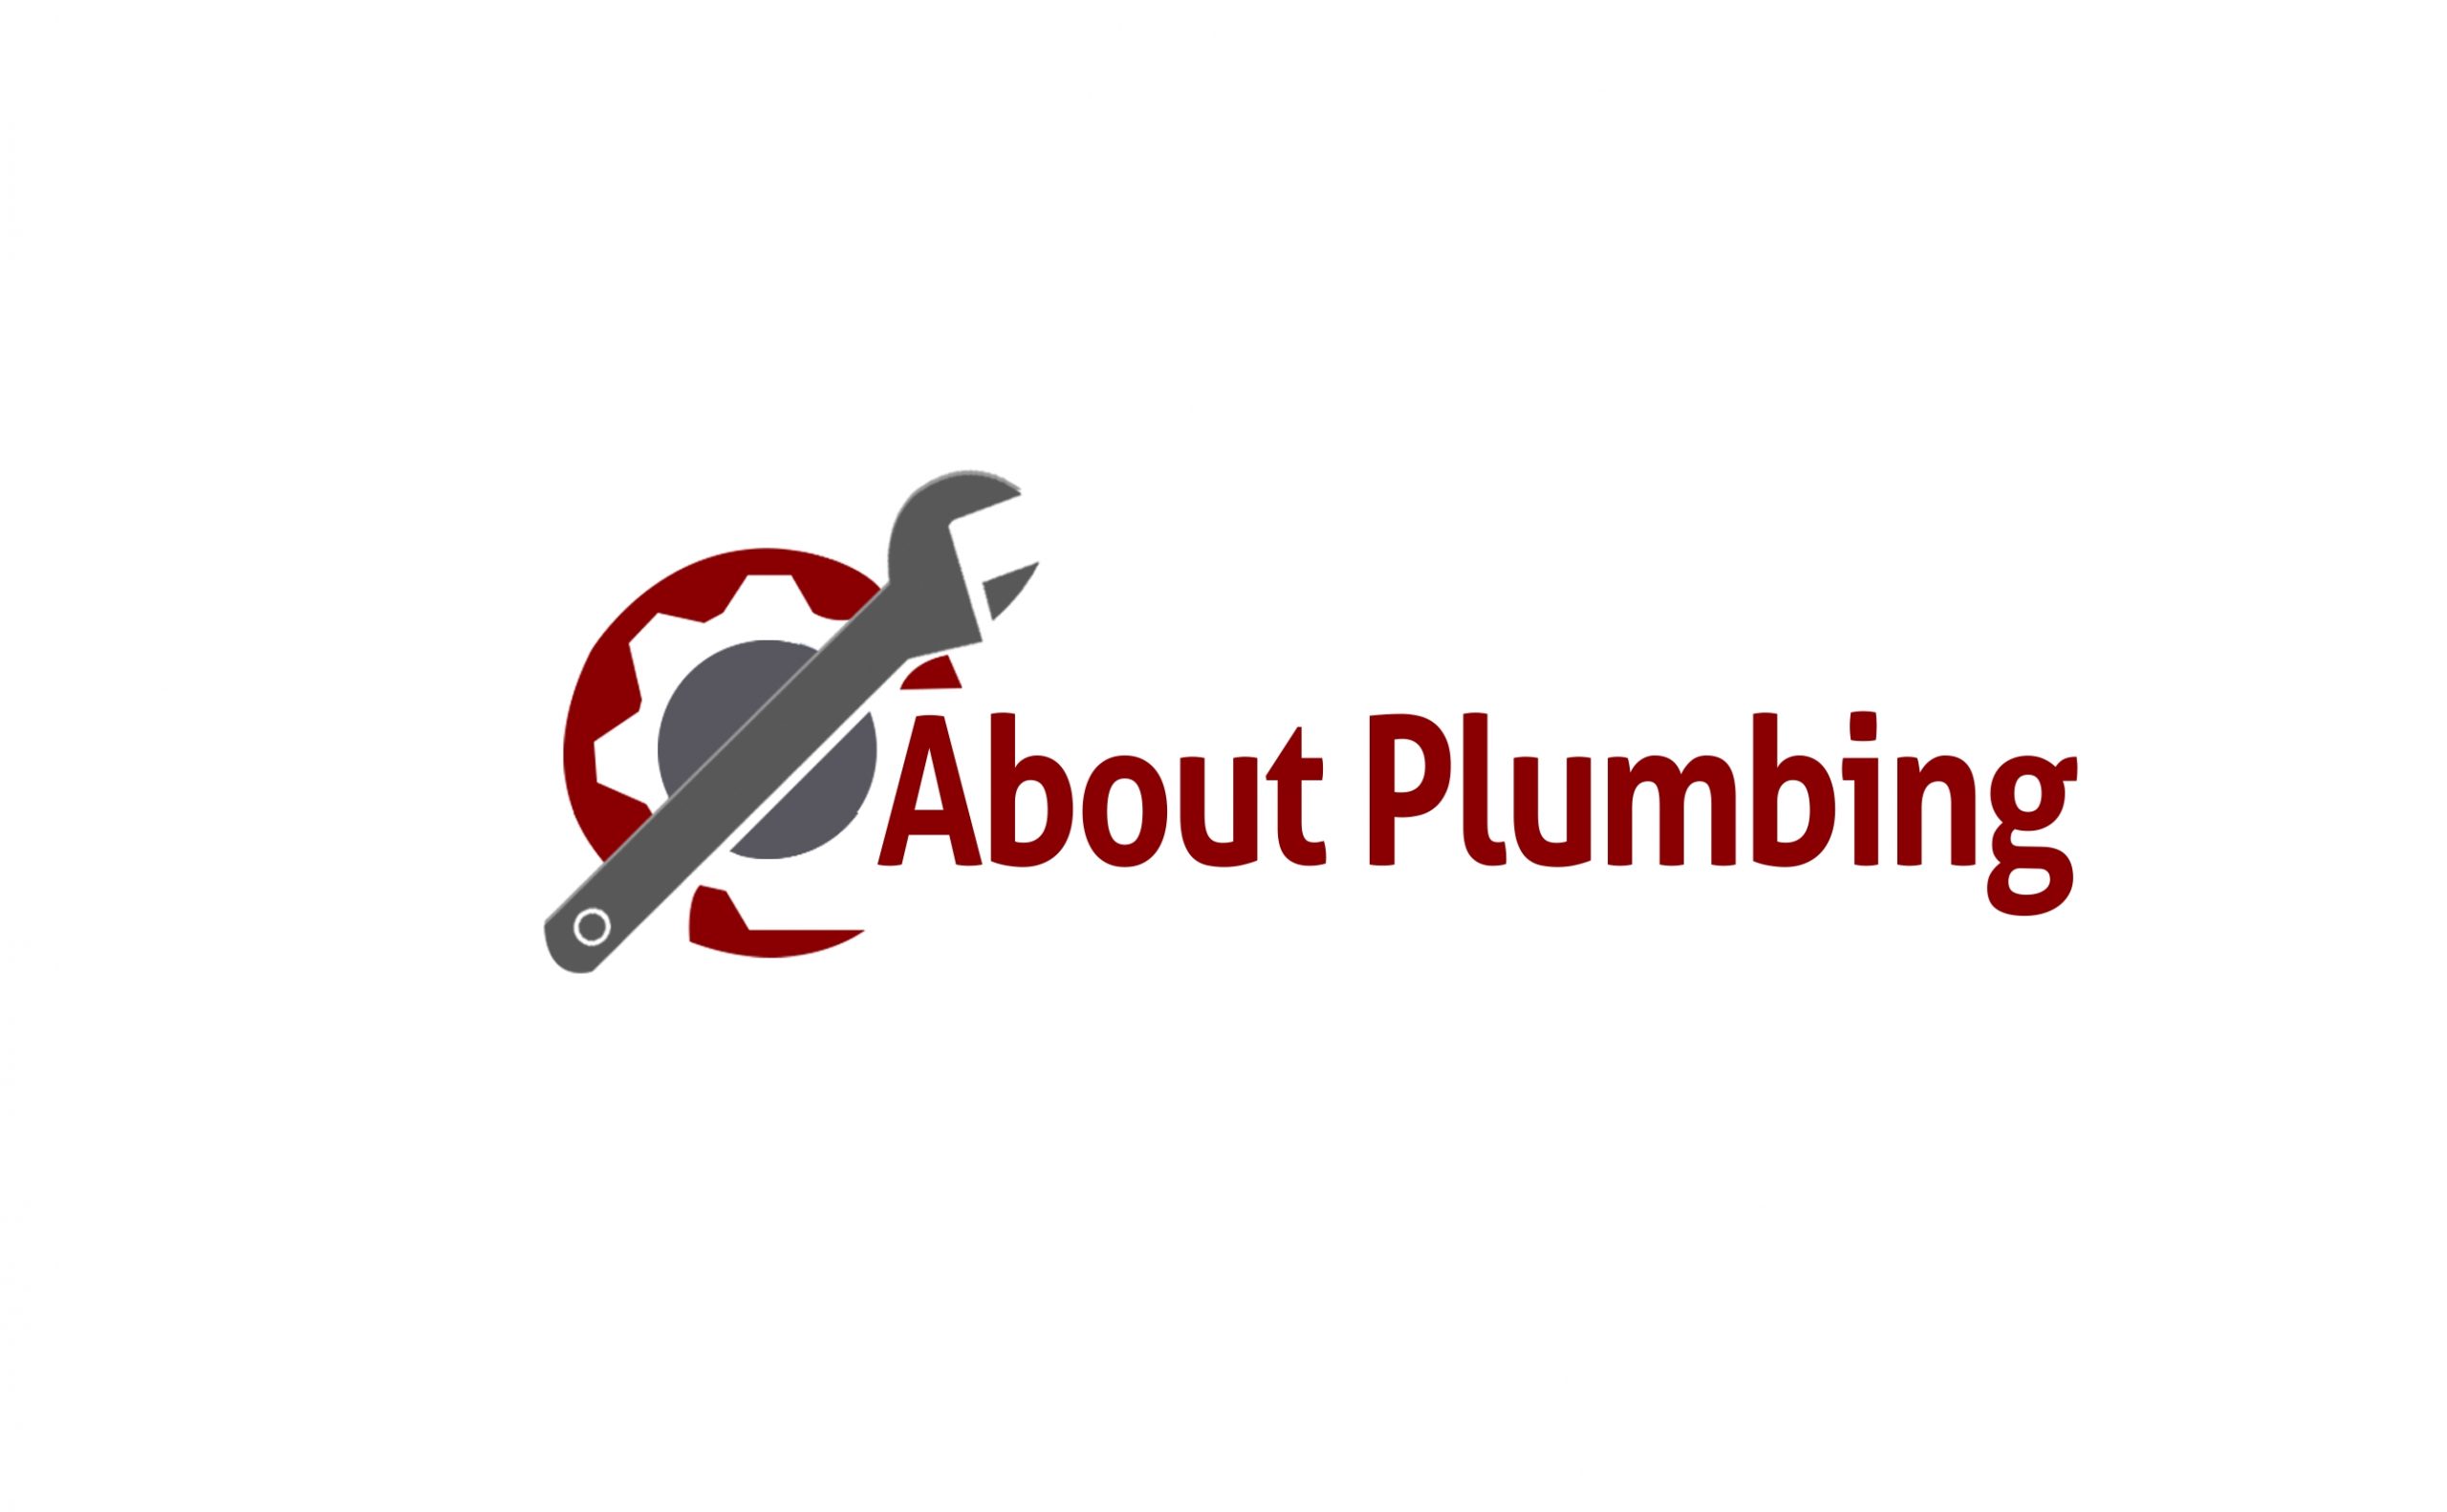 About Plumbing Inc